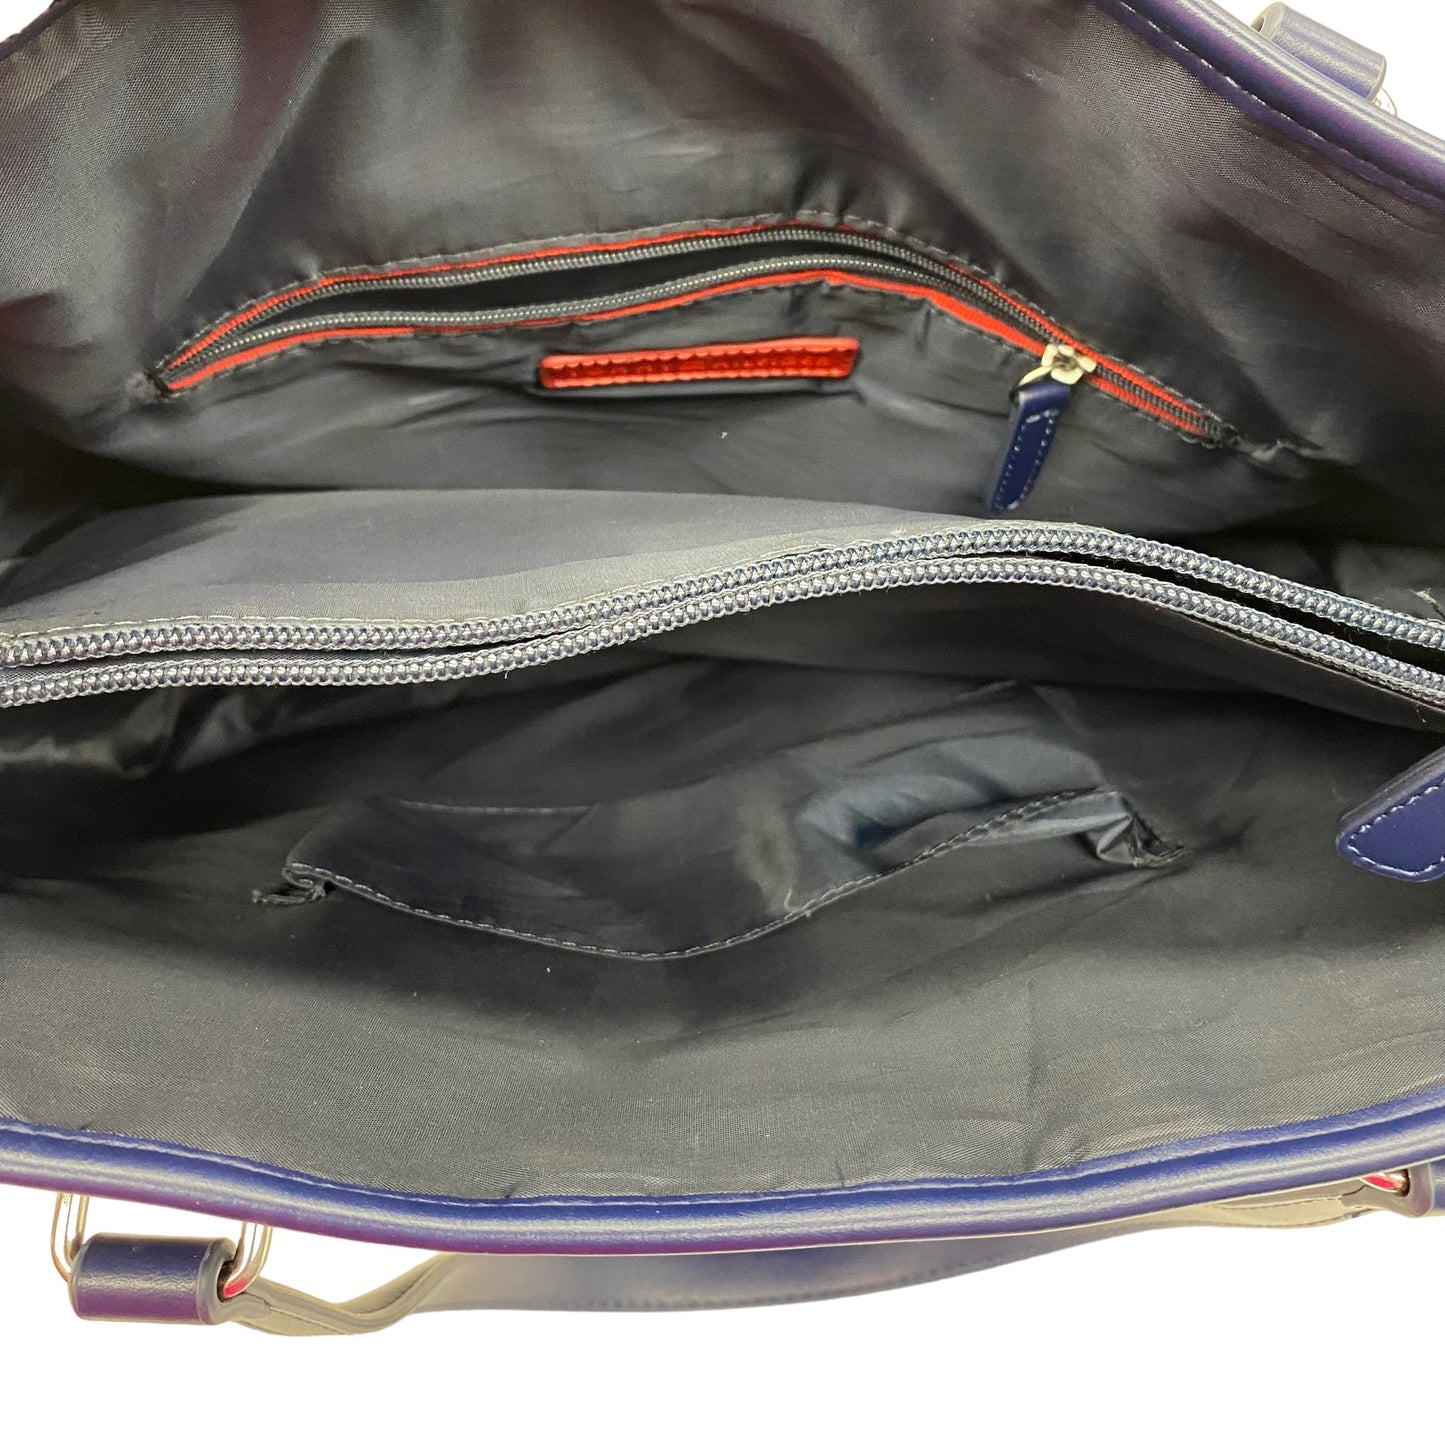 Handbag By Tommy Hilfiger  Size: Medium